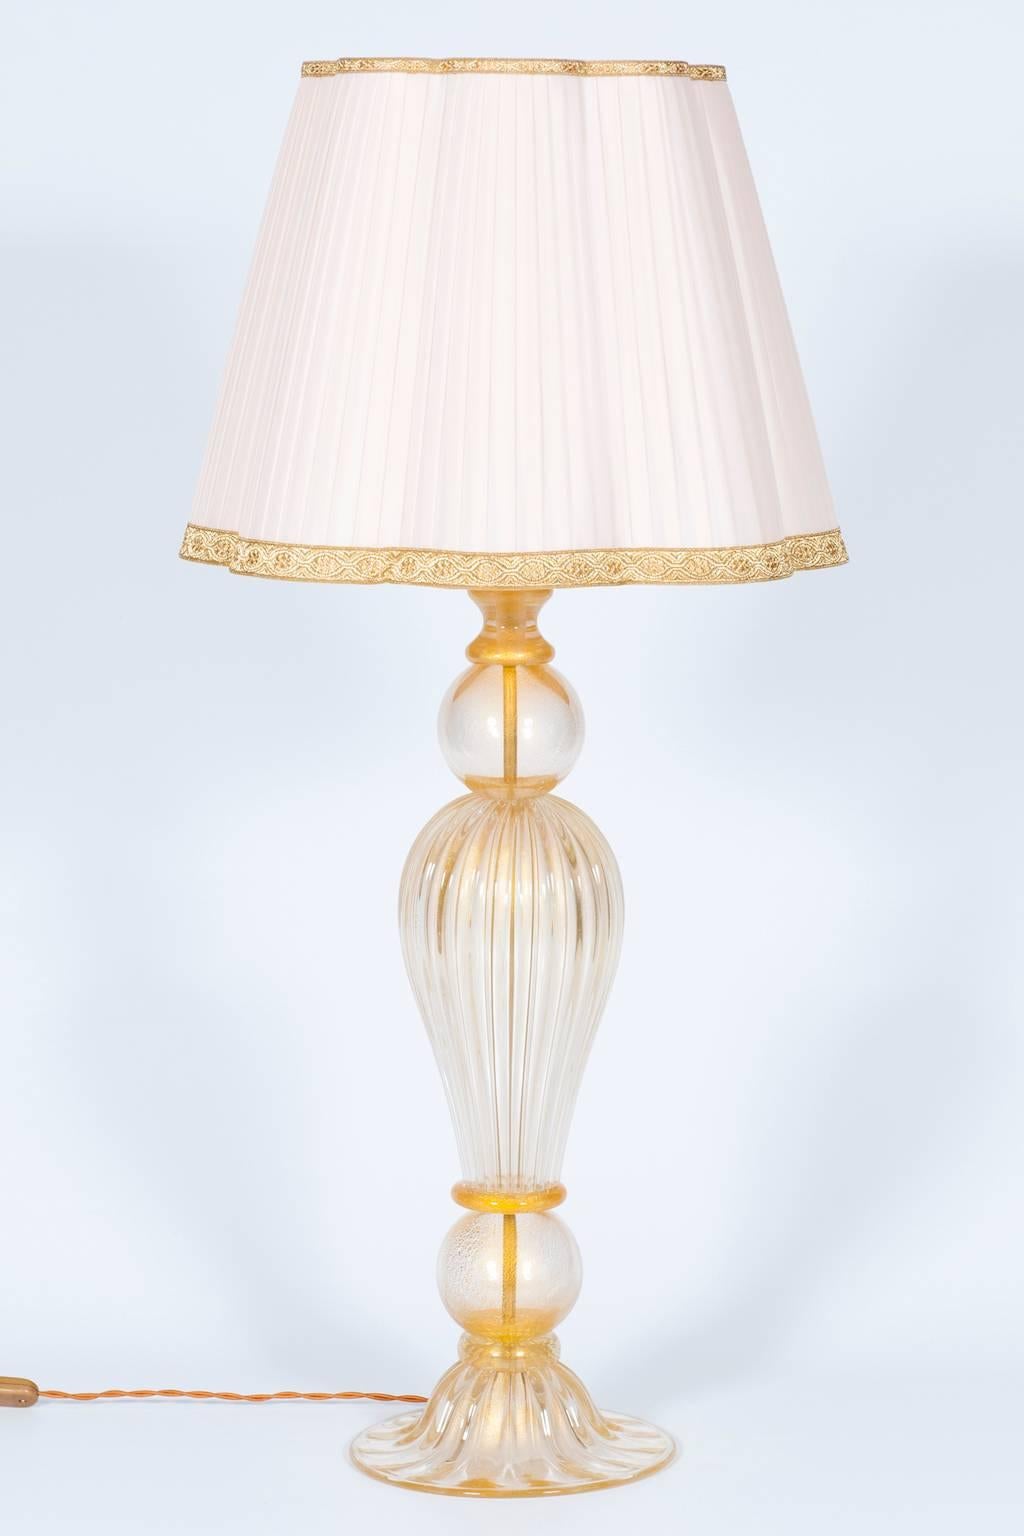 Art Deco Italian Venetian Murano Glass Table Lamp Attributed to Seguso, 1970s For Sale